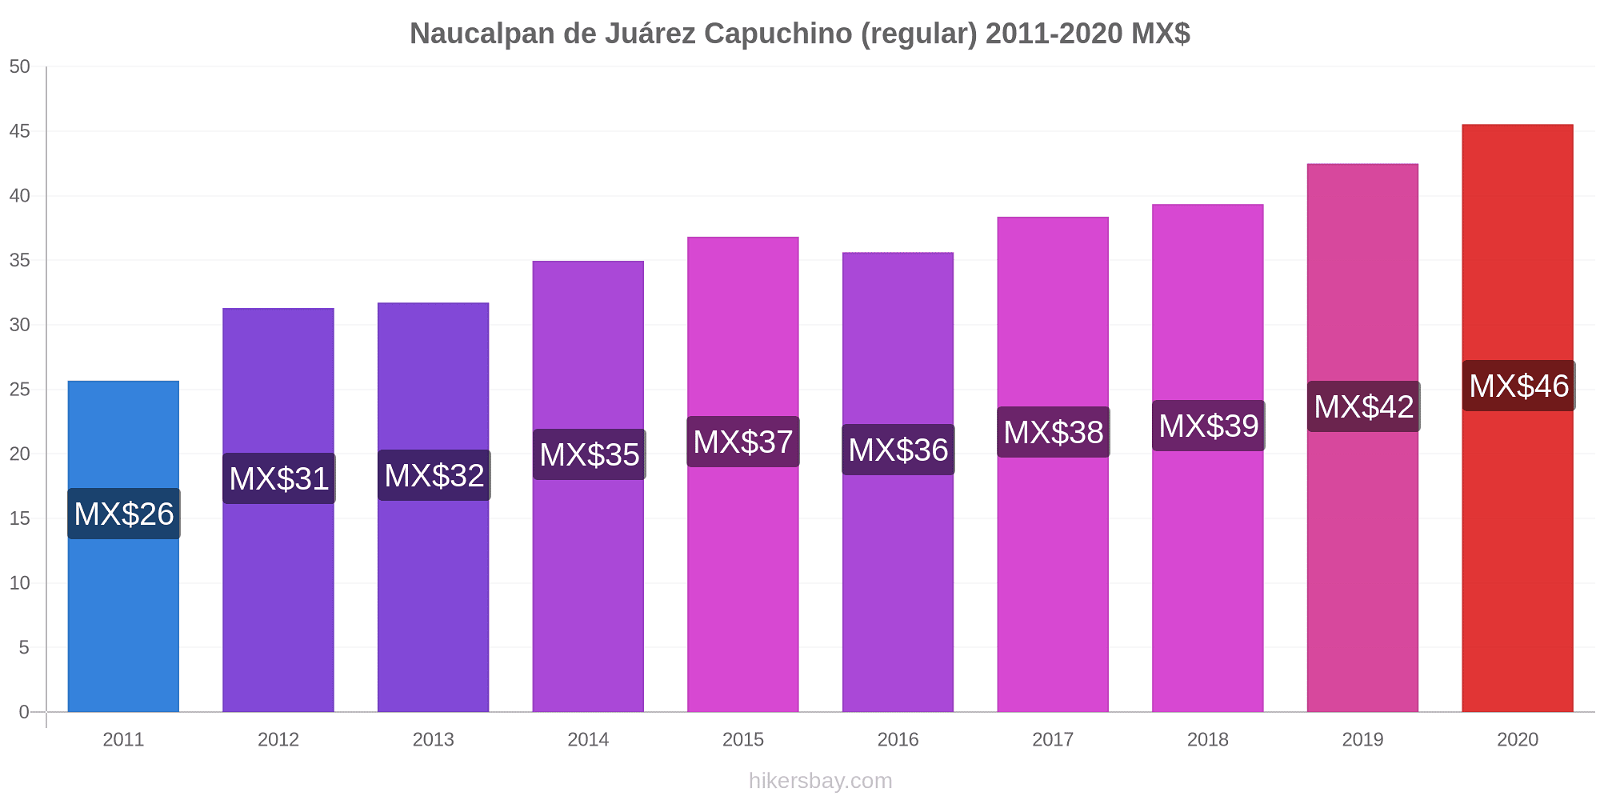 Naucalpan de Juárez cambios de precios Capuchino (regular) hikersbay.com